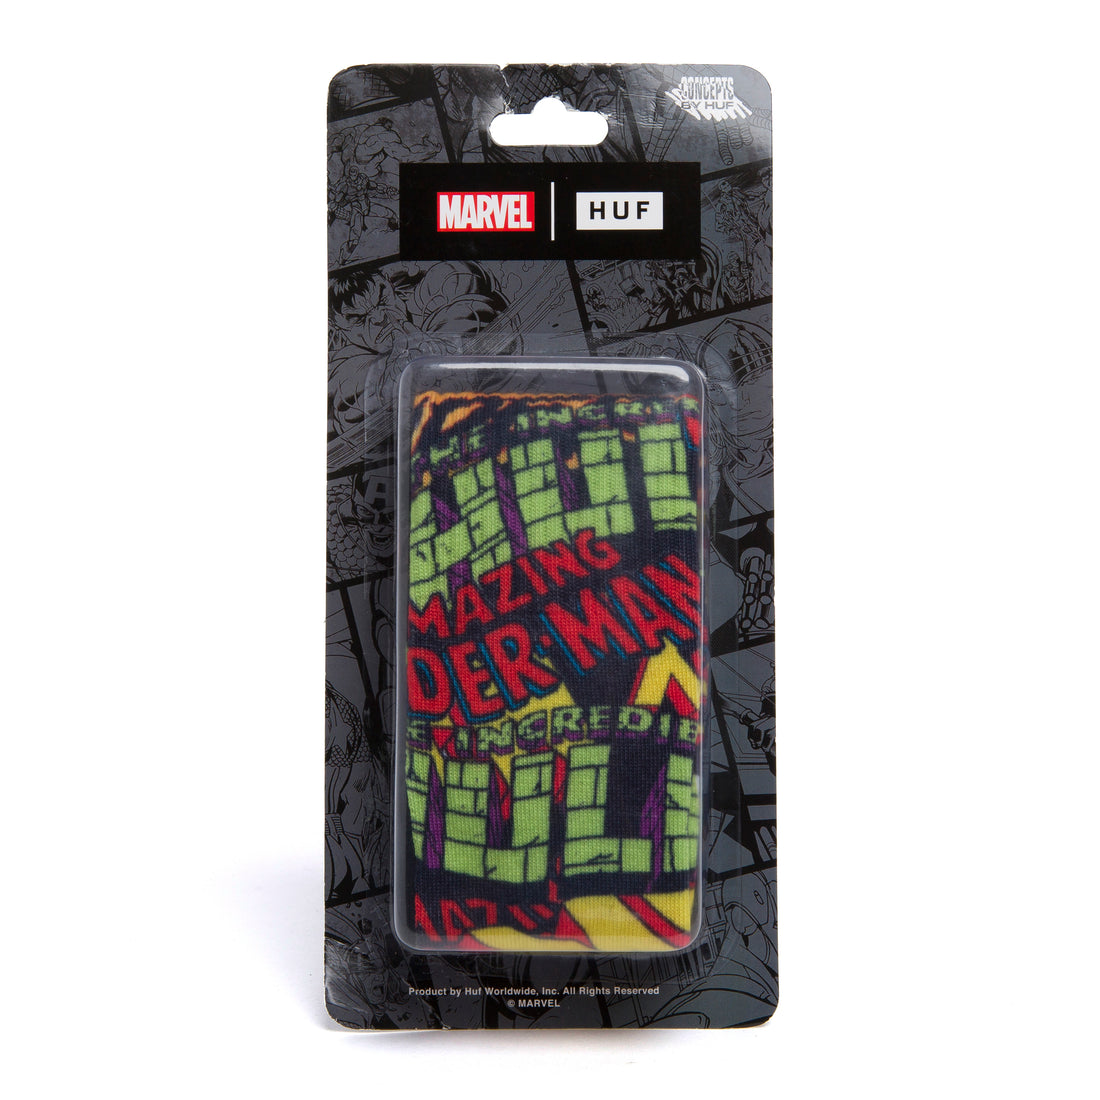 HUF x Marvel Logos Socks (Multi)